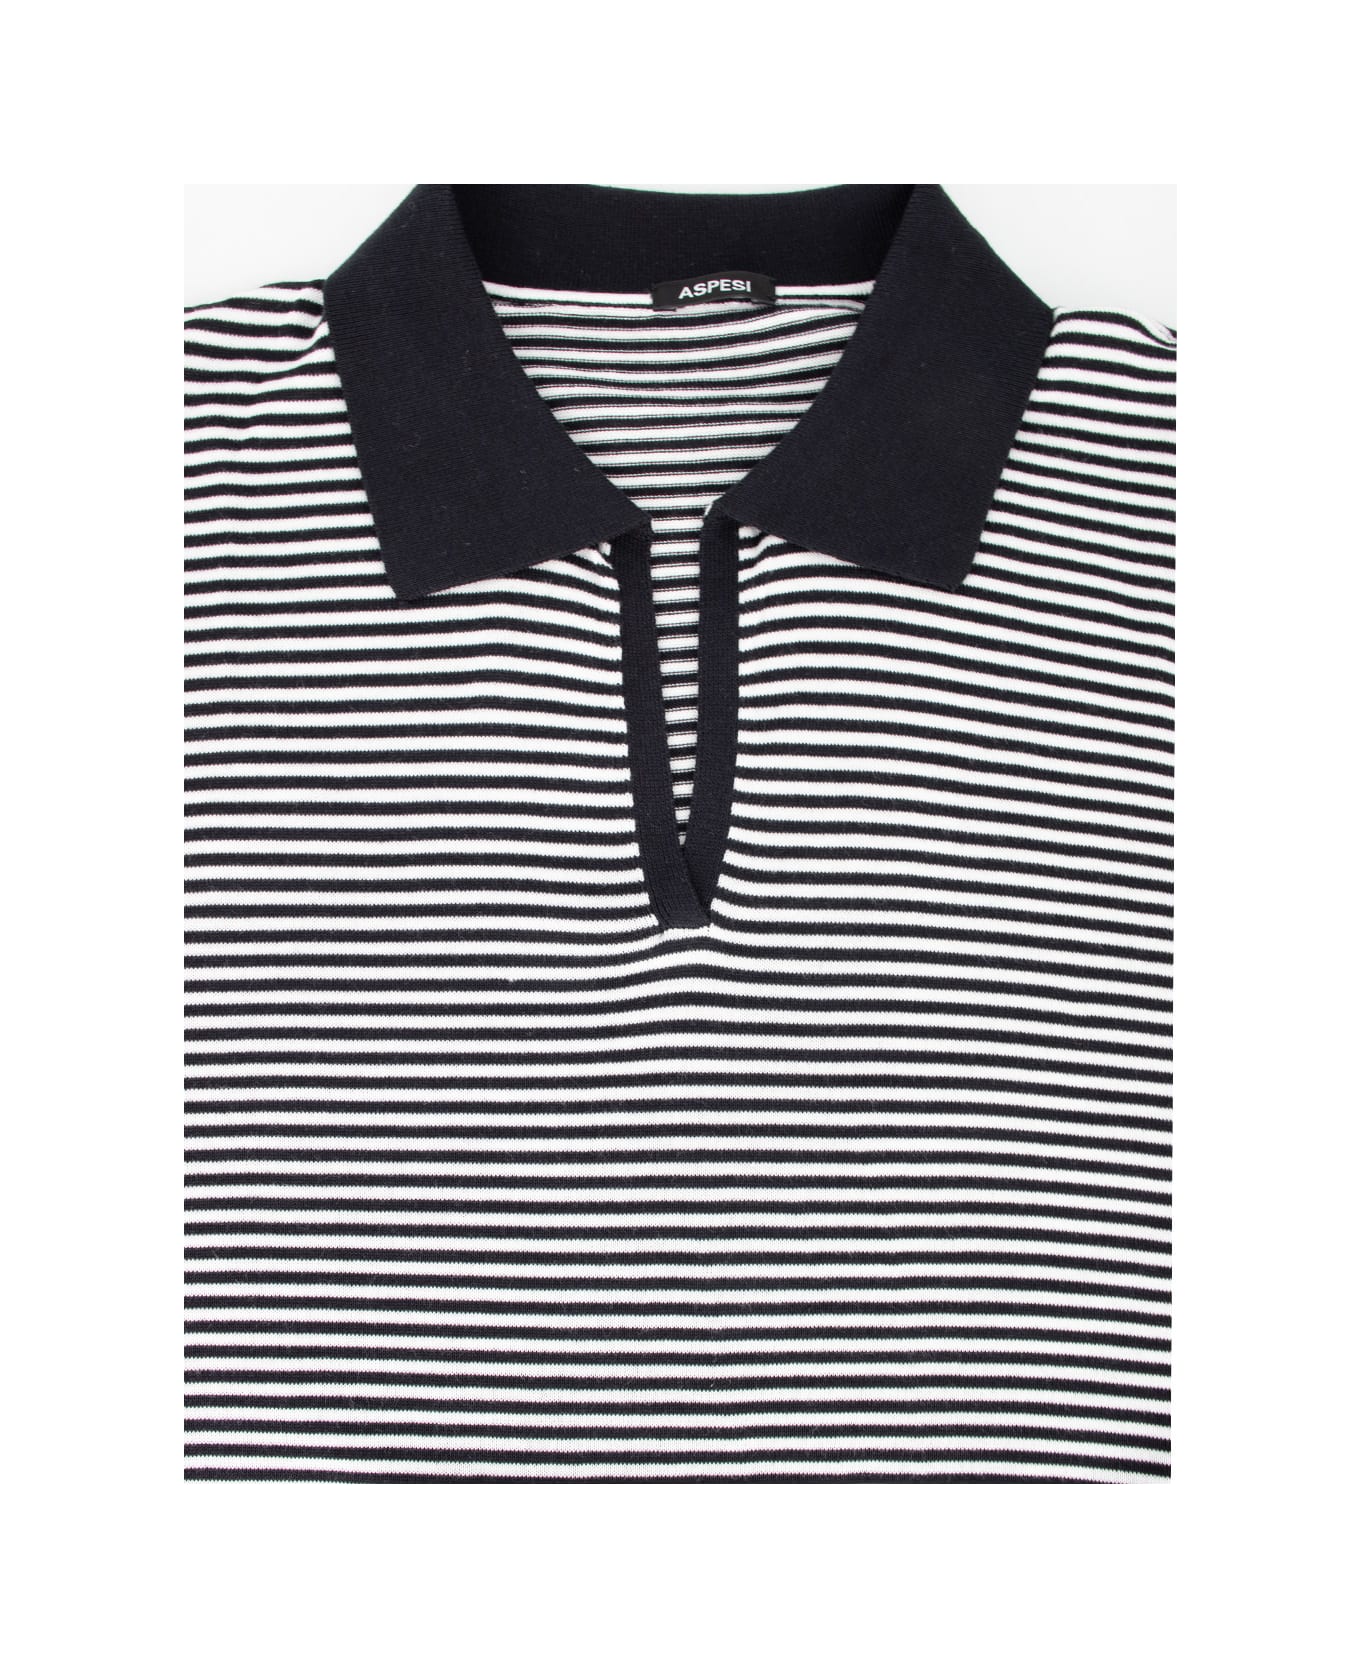 Aspesi Mod 3704 Sweater - Black Striped ポロシャツ